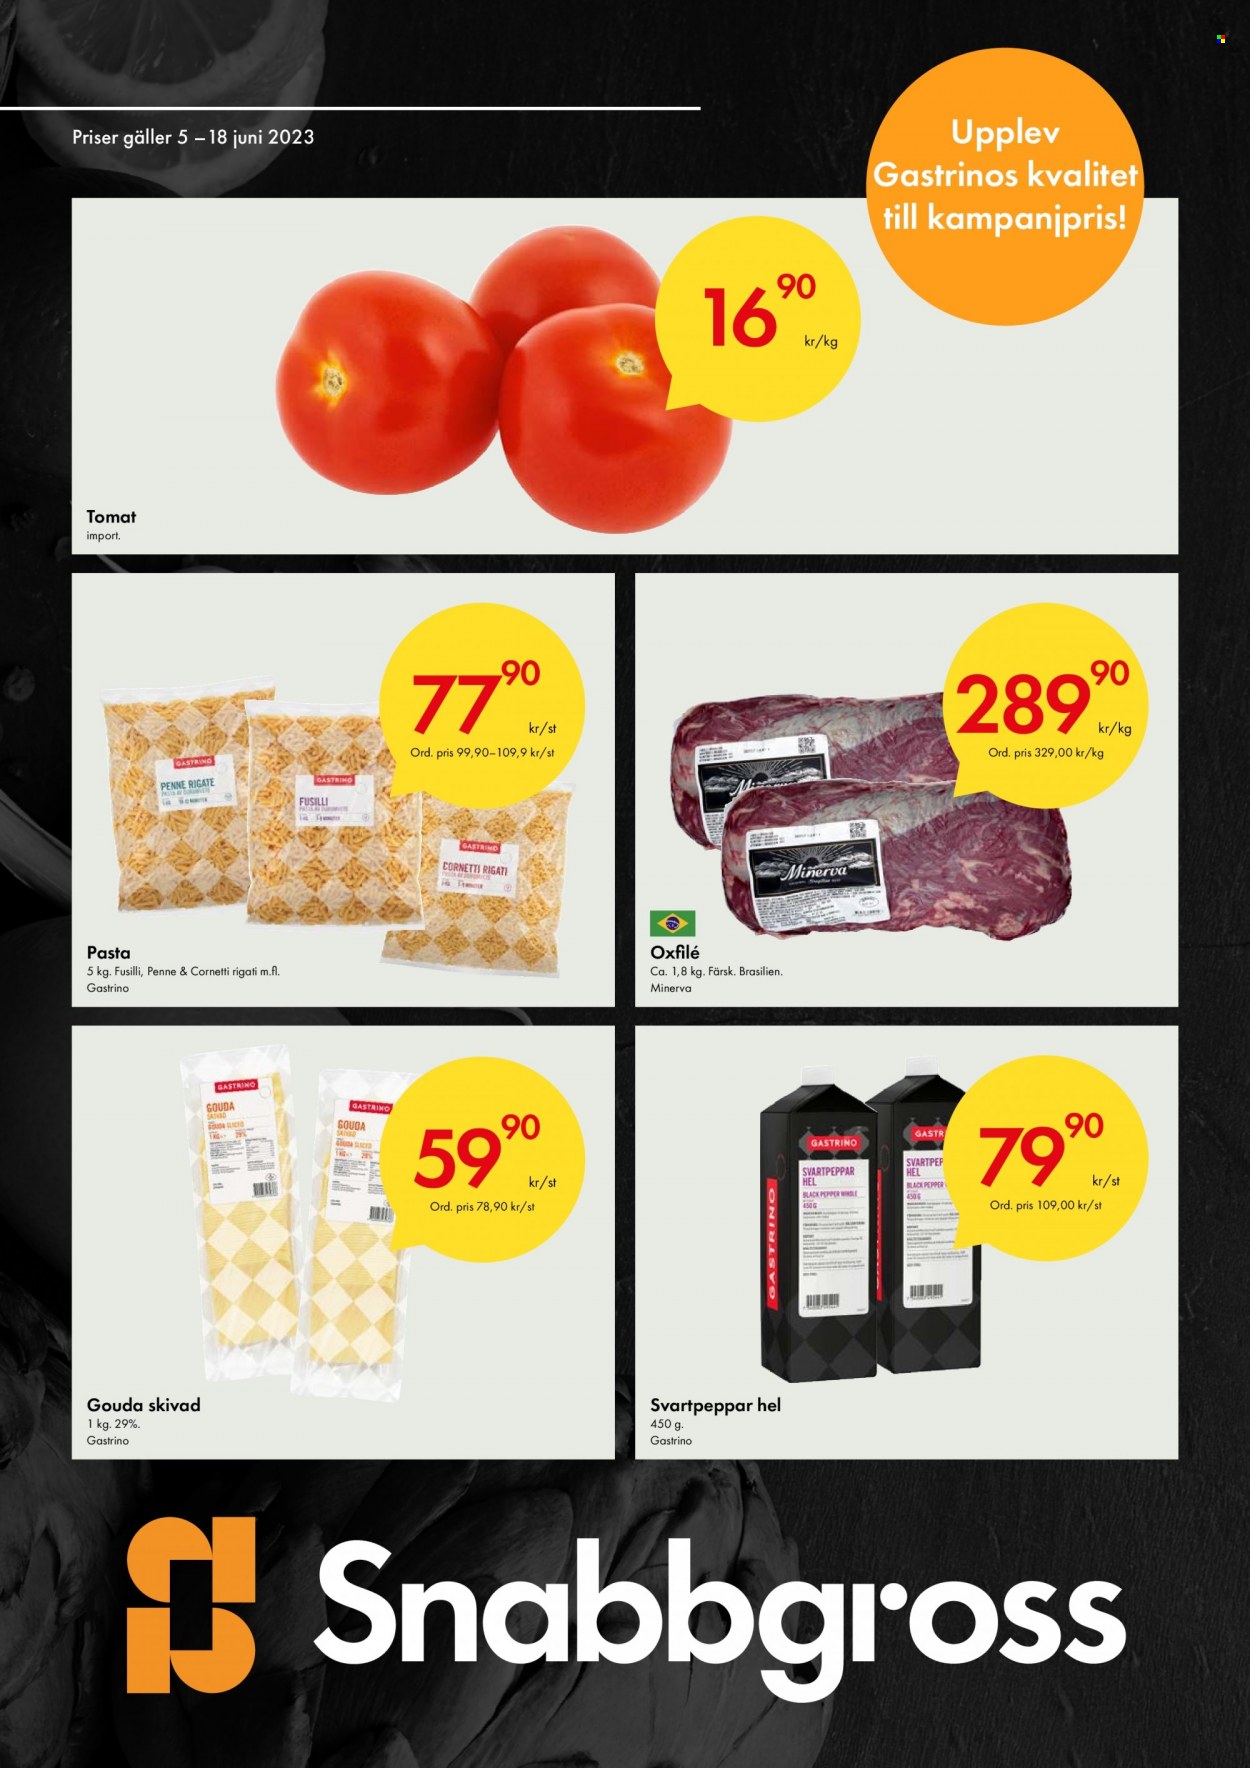 thumbnail - Axfood Snabbgross reklamblad - 5/6 2023 - 18/6 2023 - varor från reklamblad - oxfilé, nötkött, tomat, gouda, pasta. Sida 1.